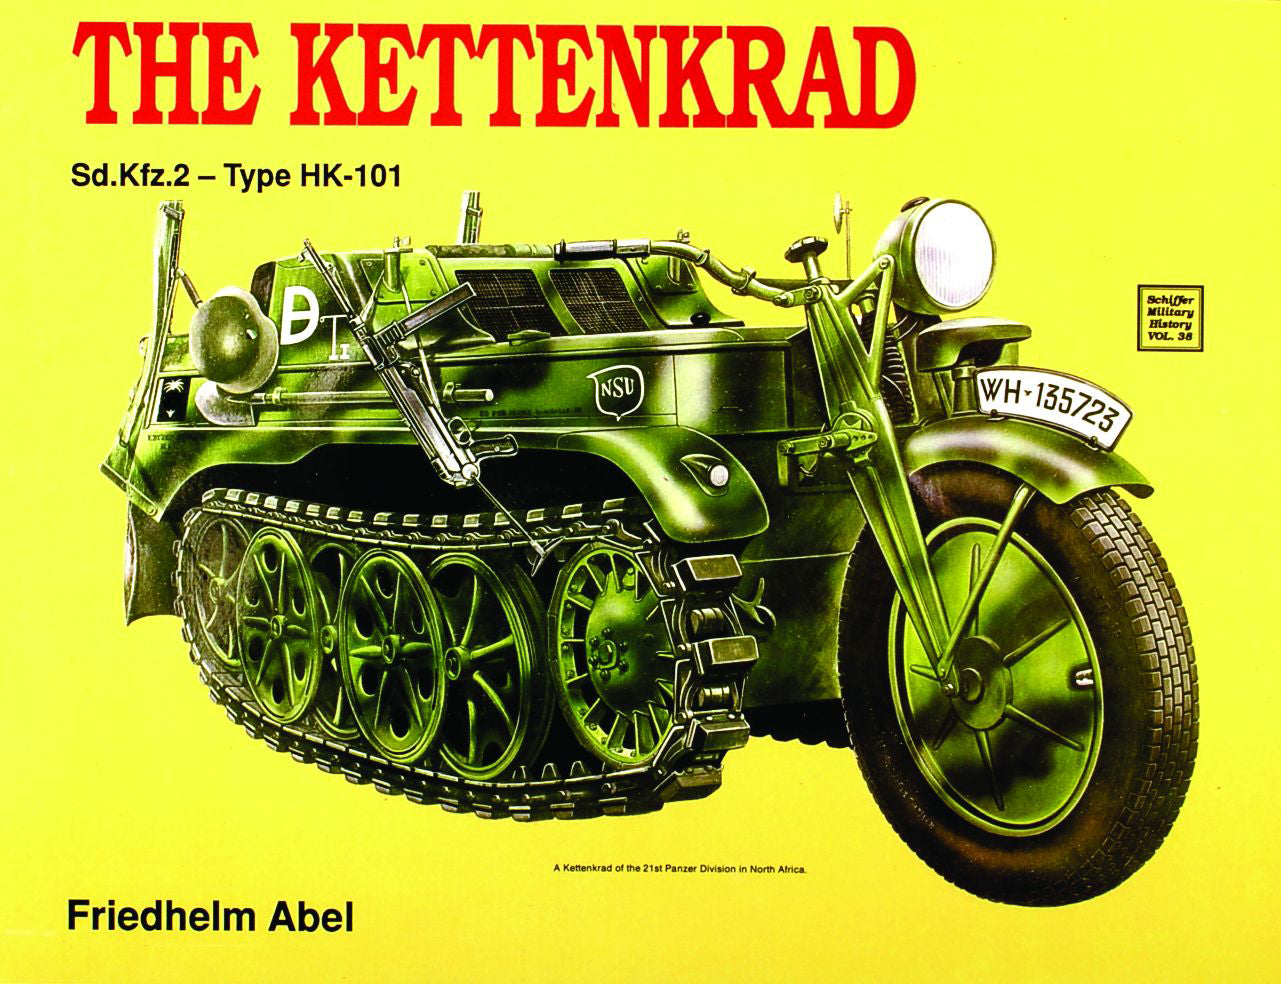 The Kettenkrad